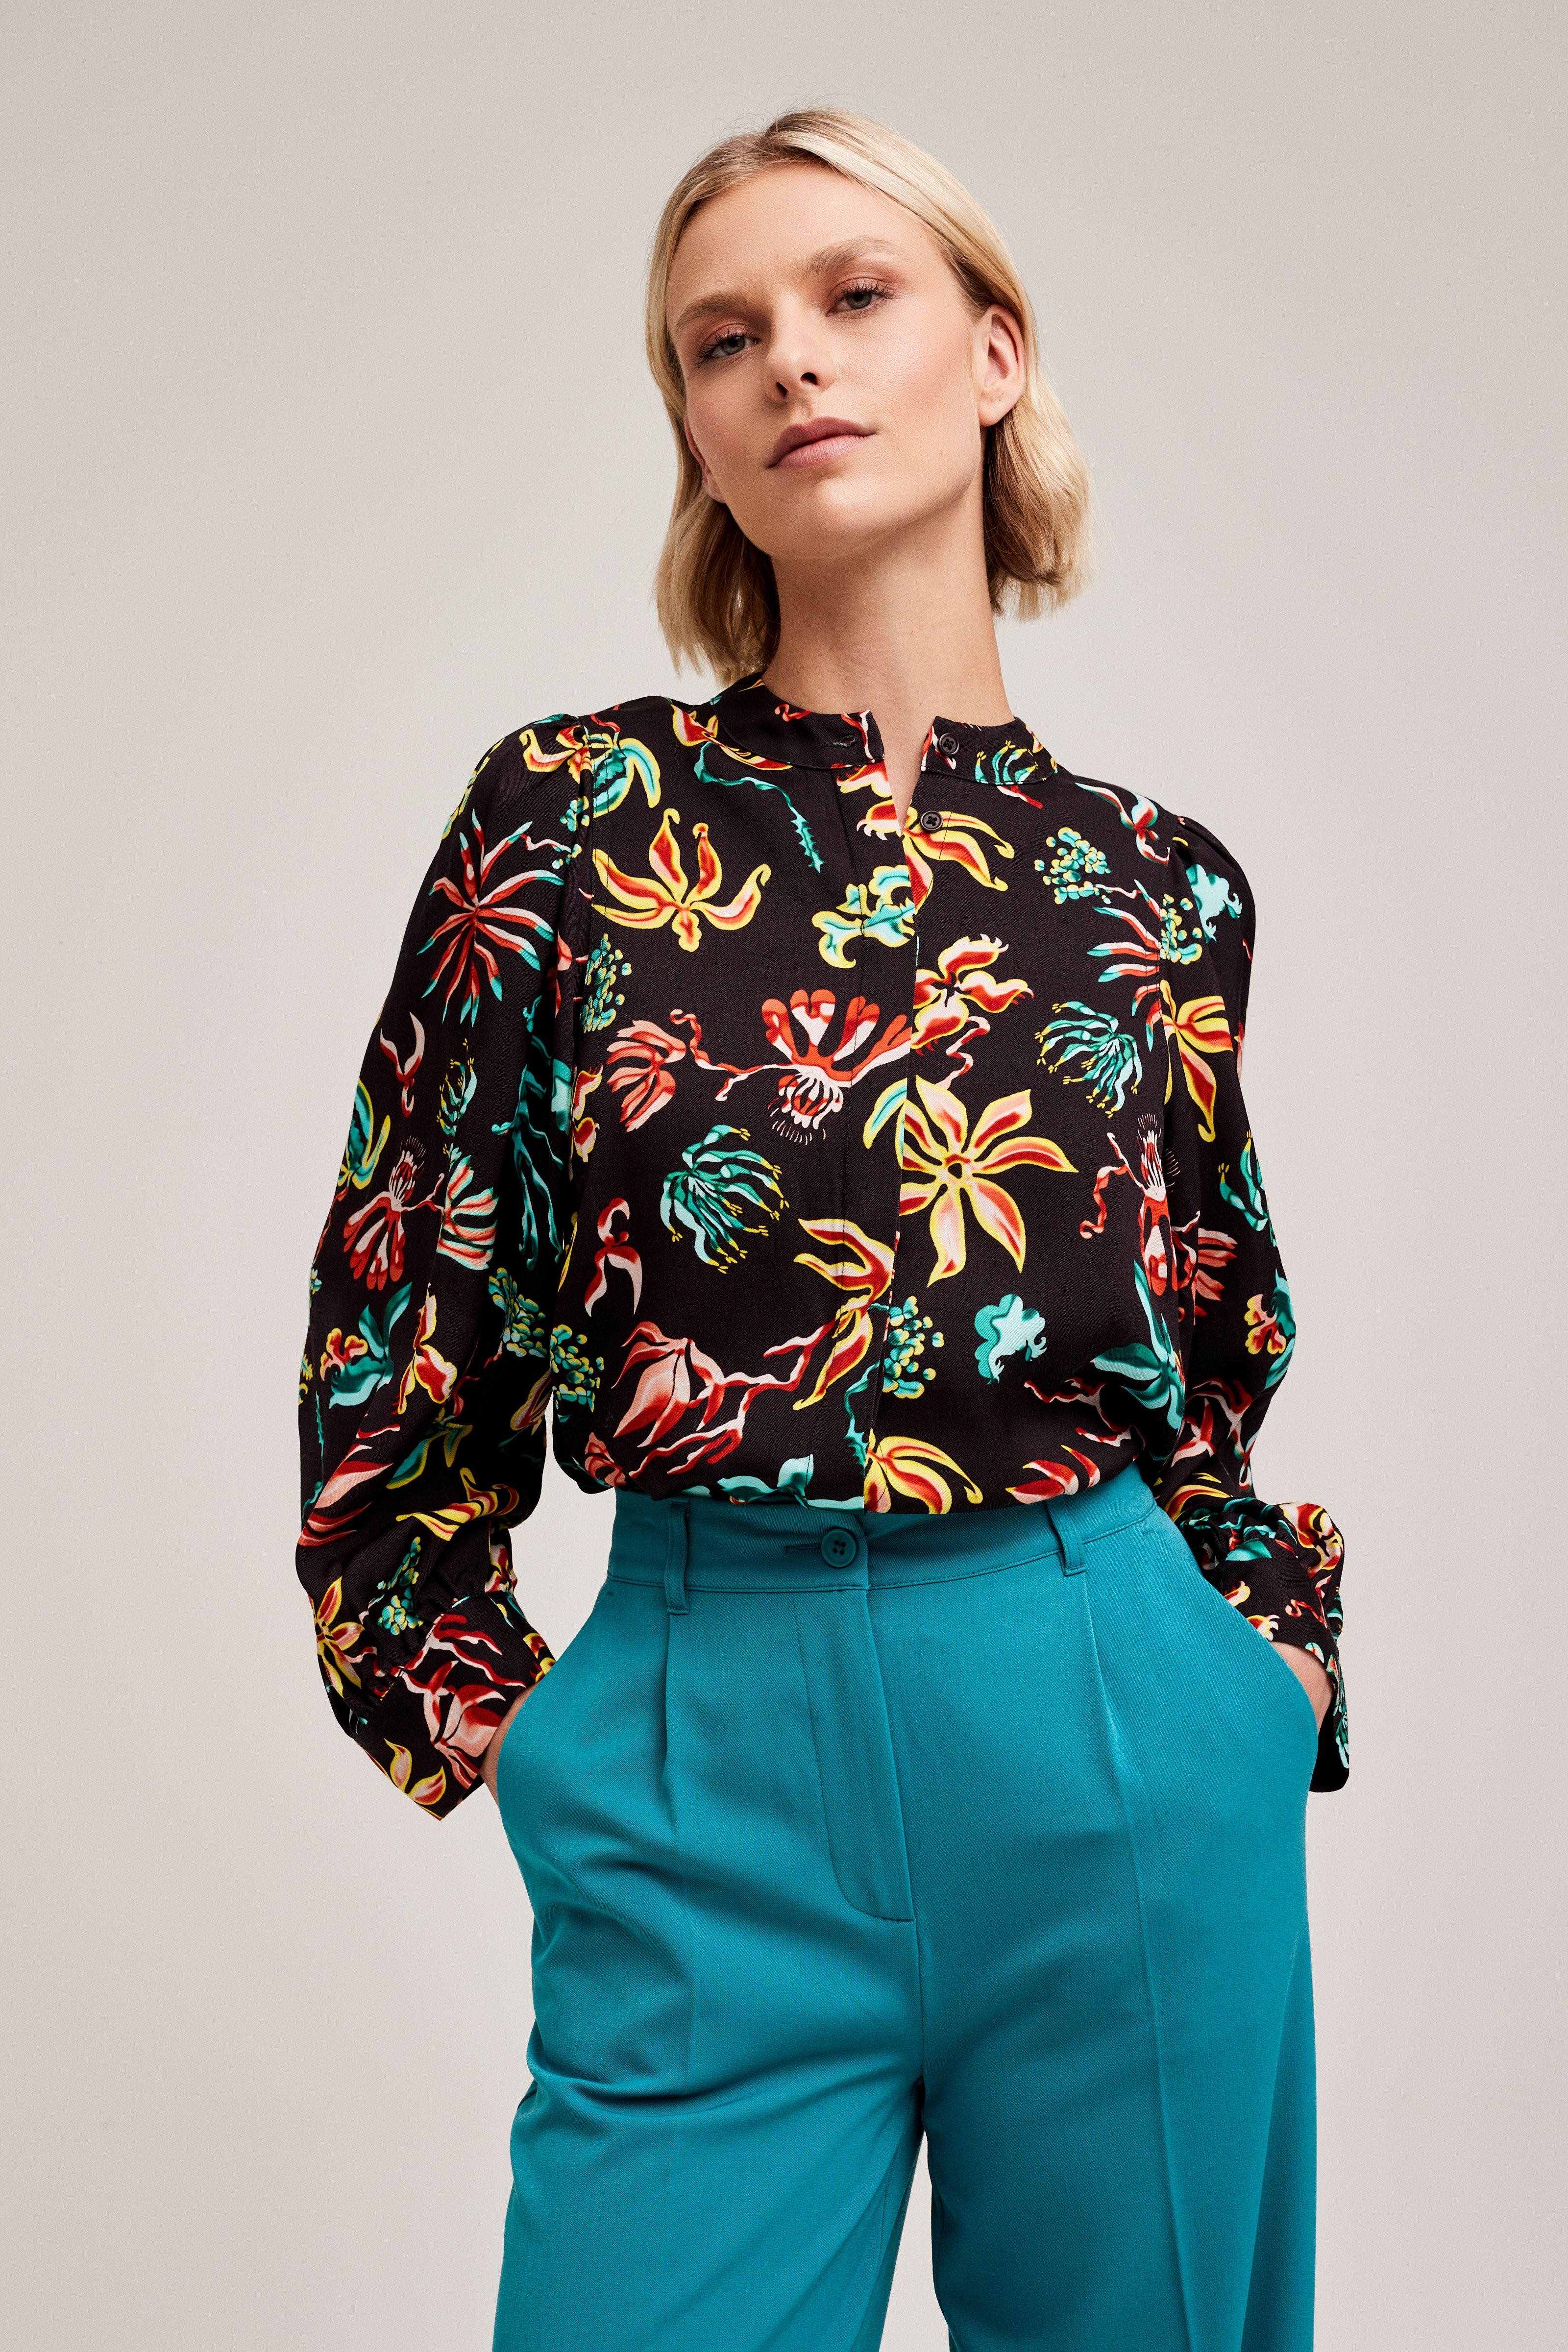 CKS Dames - ROSALINE - blouse short sleeves - multicolor